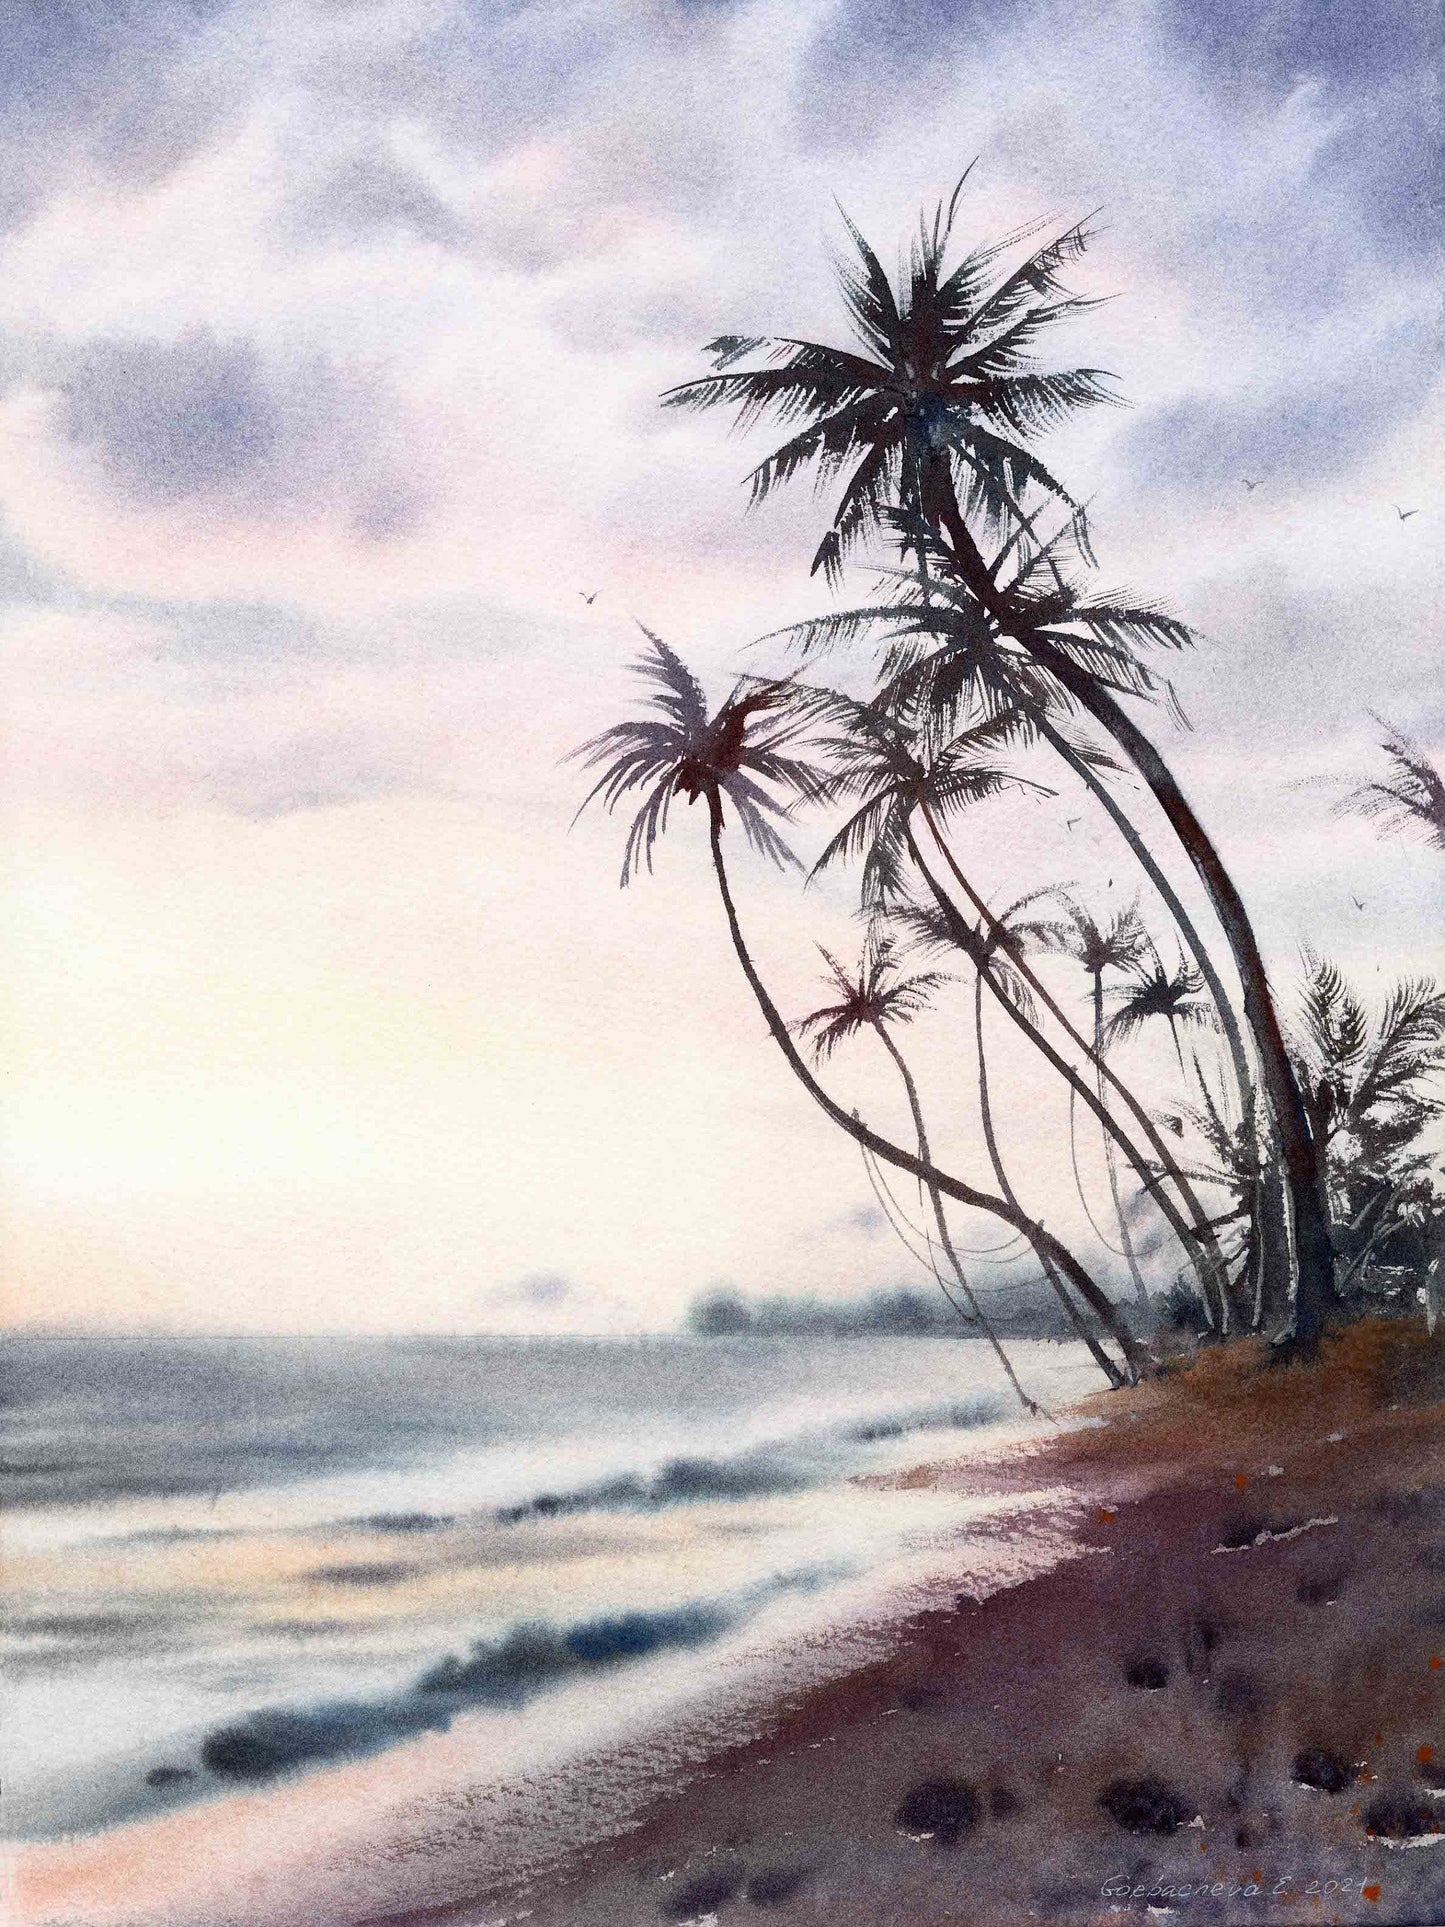 Beach Palm Wall Art, Watercolor Ocean Print, Coastal Wall Decor, Canvas Painting, Sea Wave, Travel Poster Gift Idea